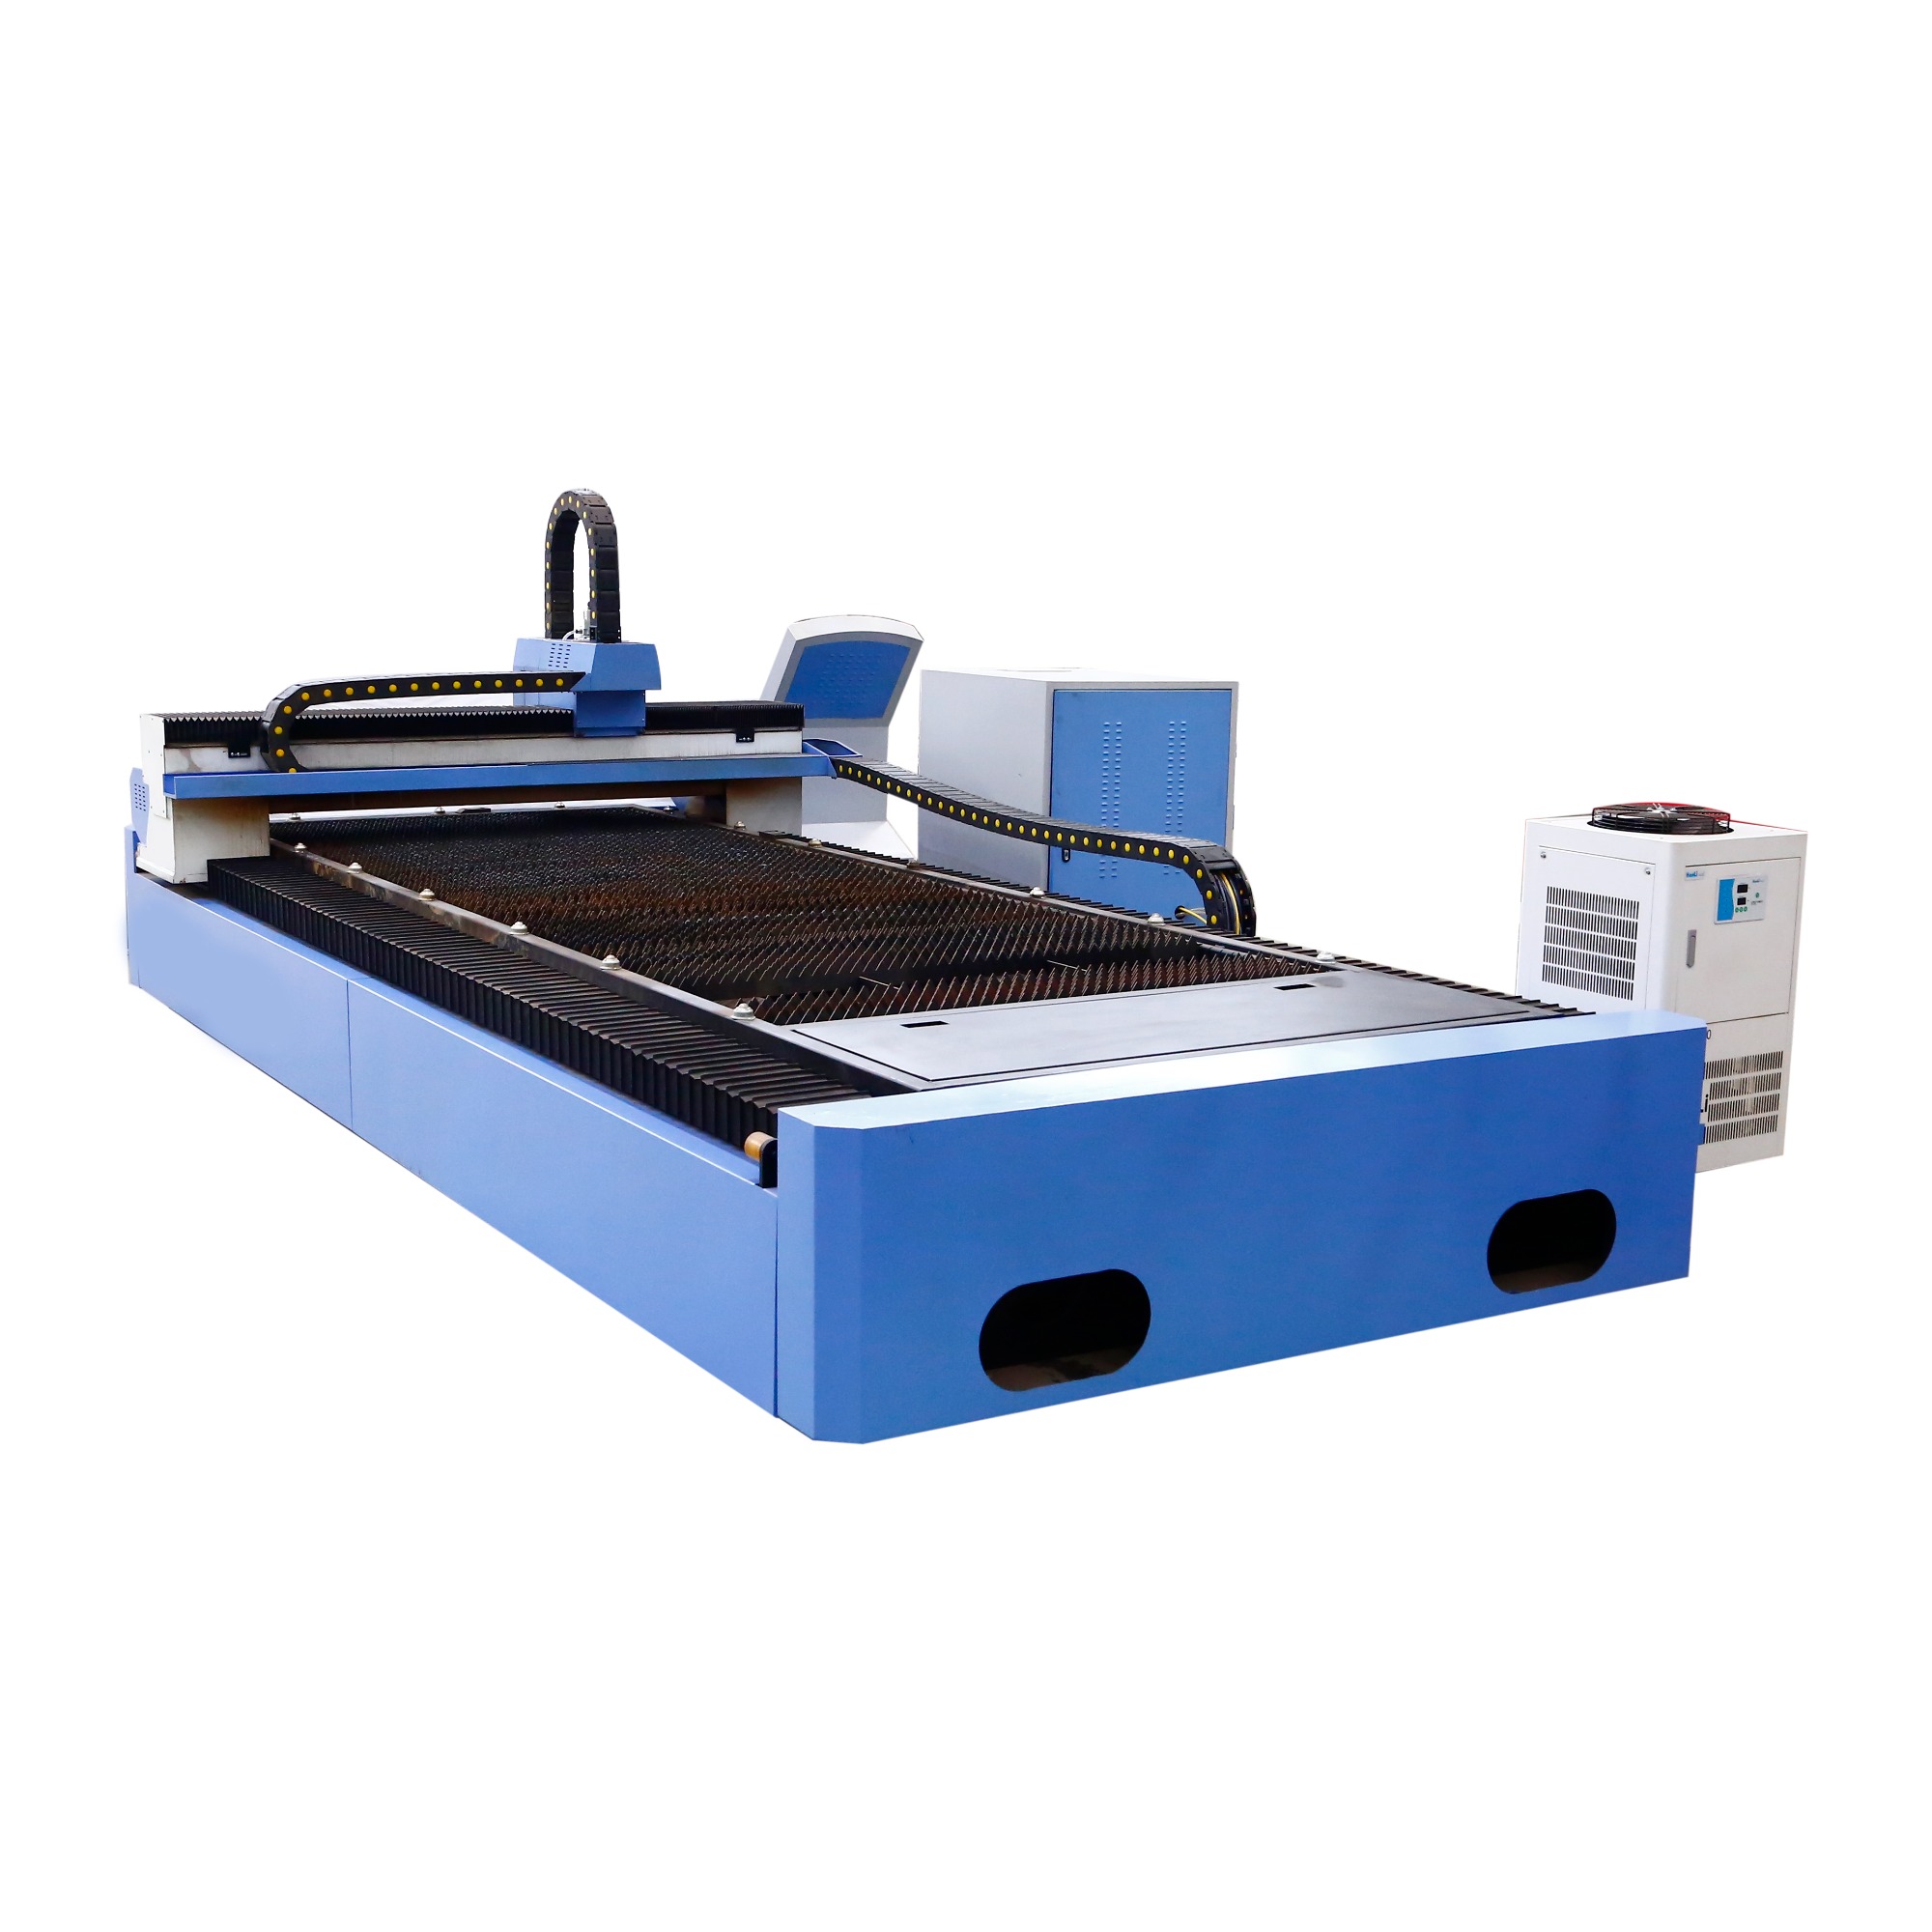 Single platform fiber laser cutting machine